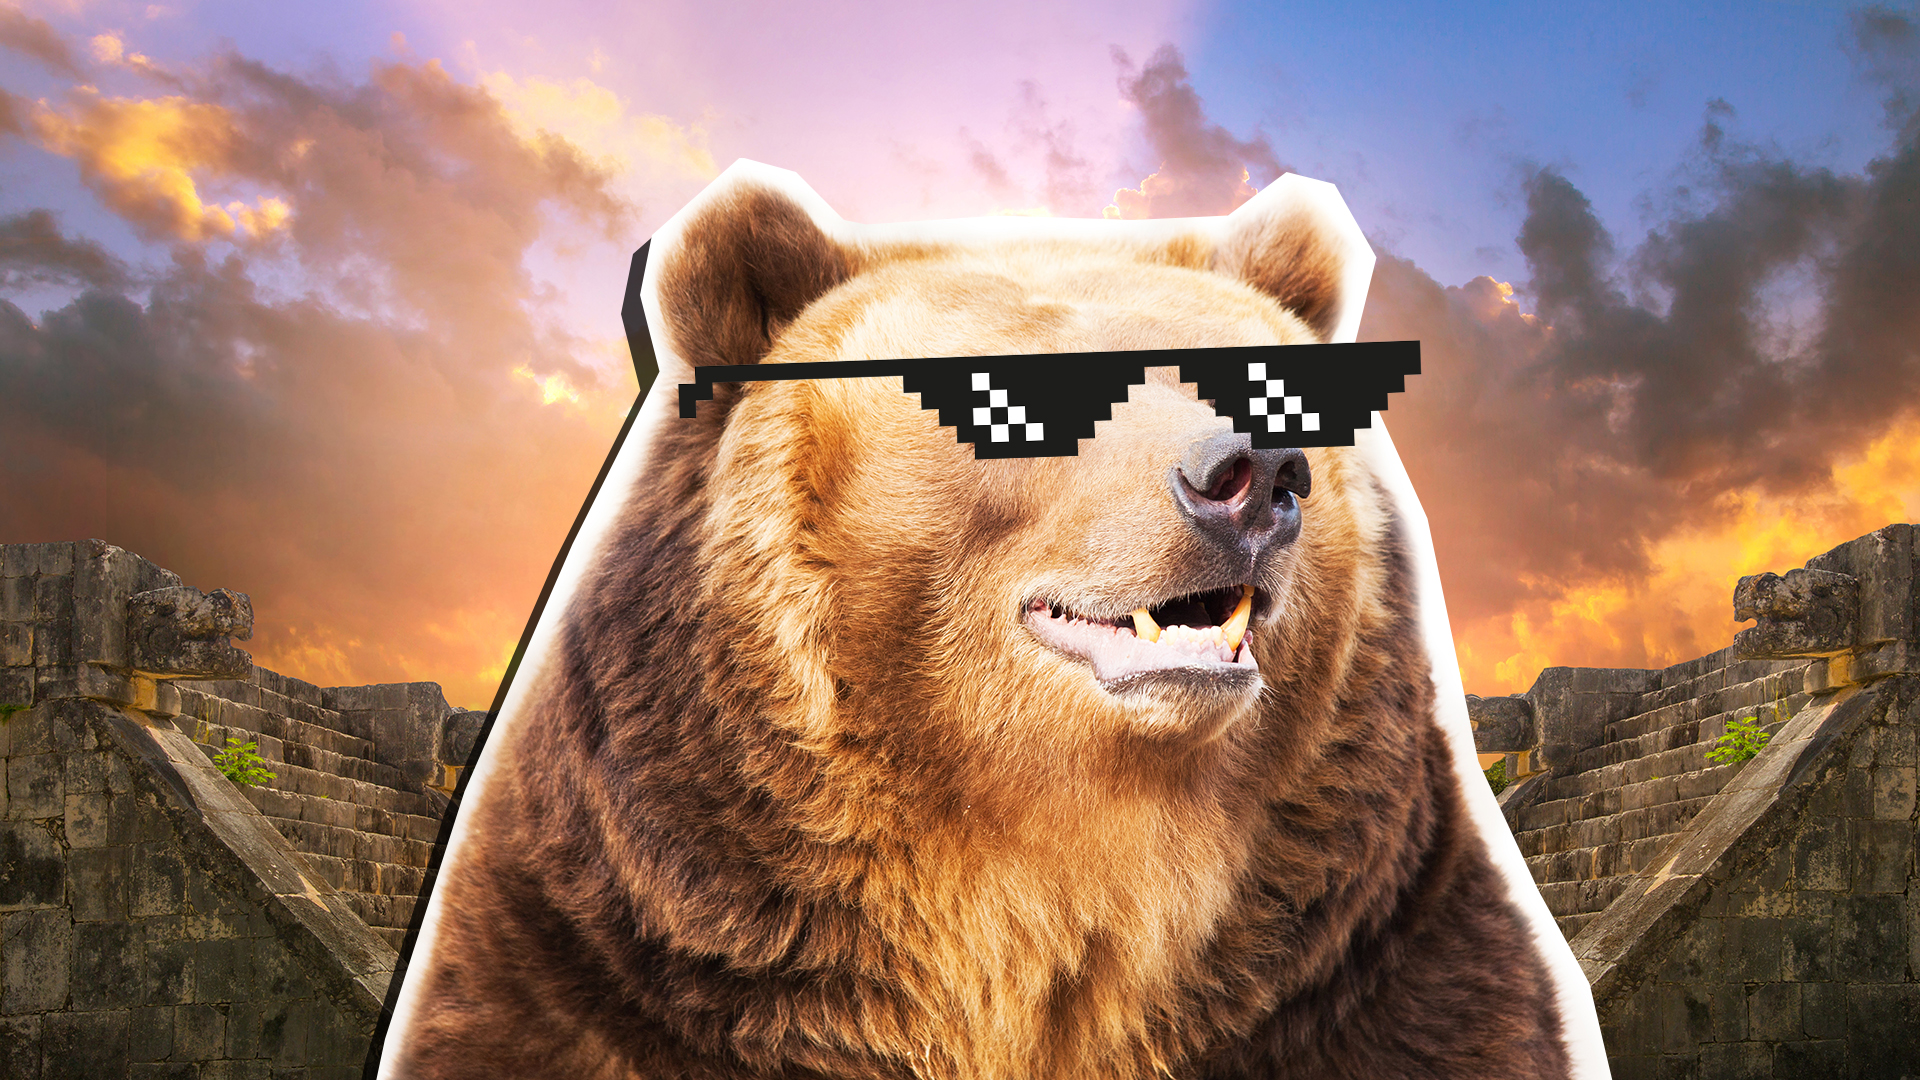 A brown bear wearing sunglasses